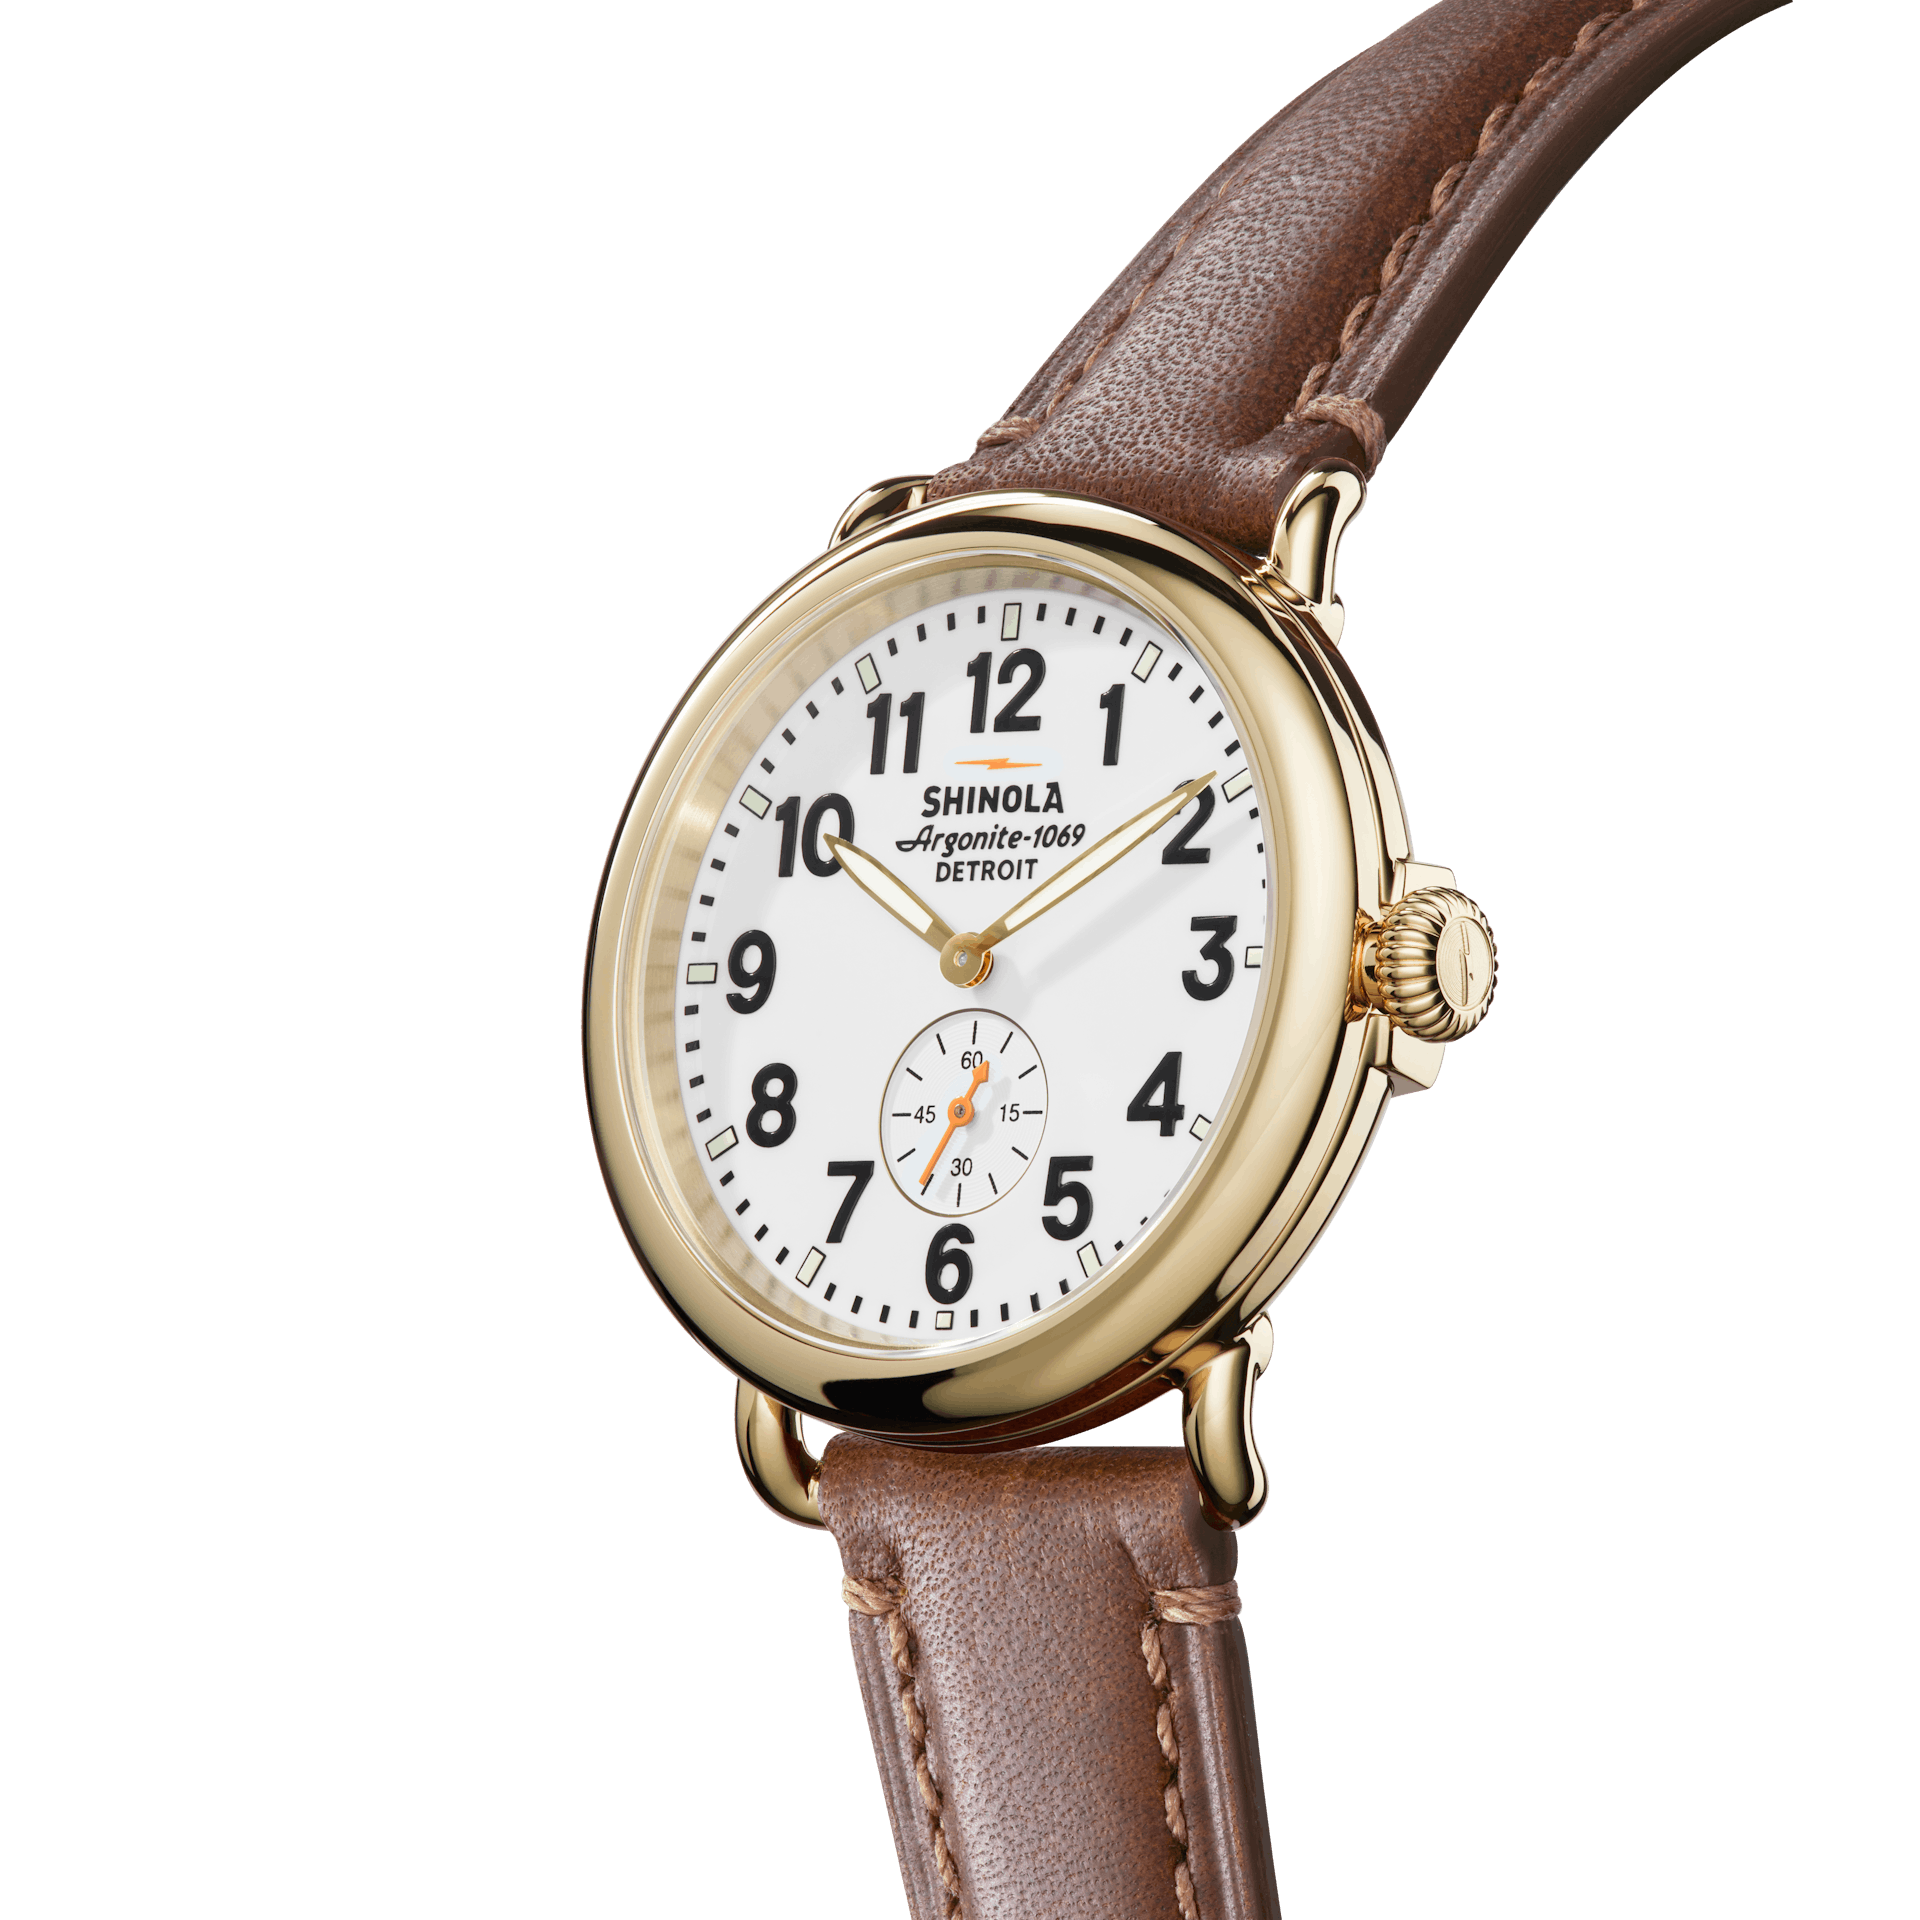 Shinola Men's Watch | White Dial + Brown Leather Strap | The Runwell 41mm |  Shinola® Detroit